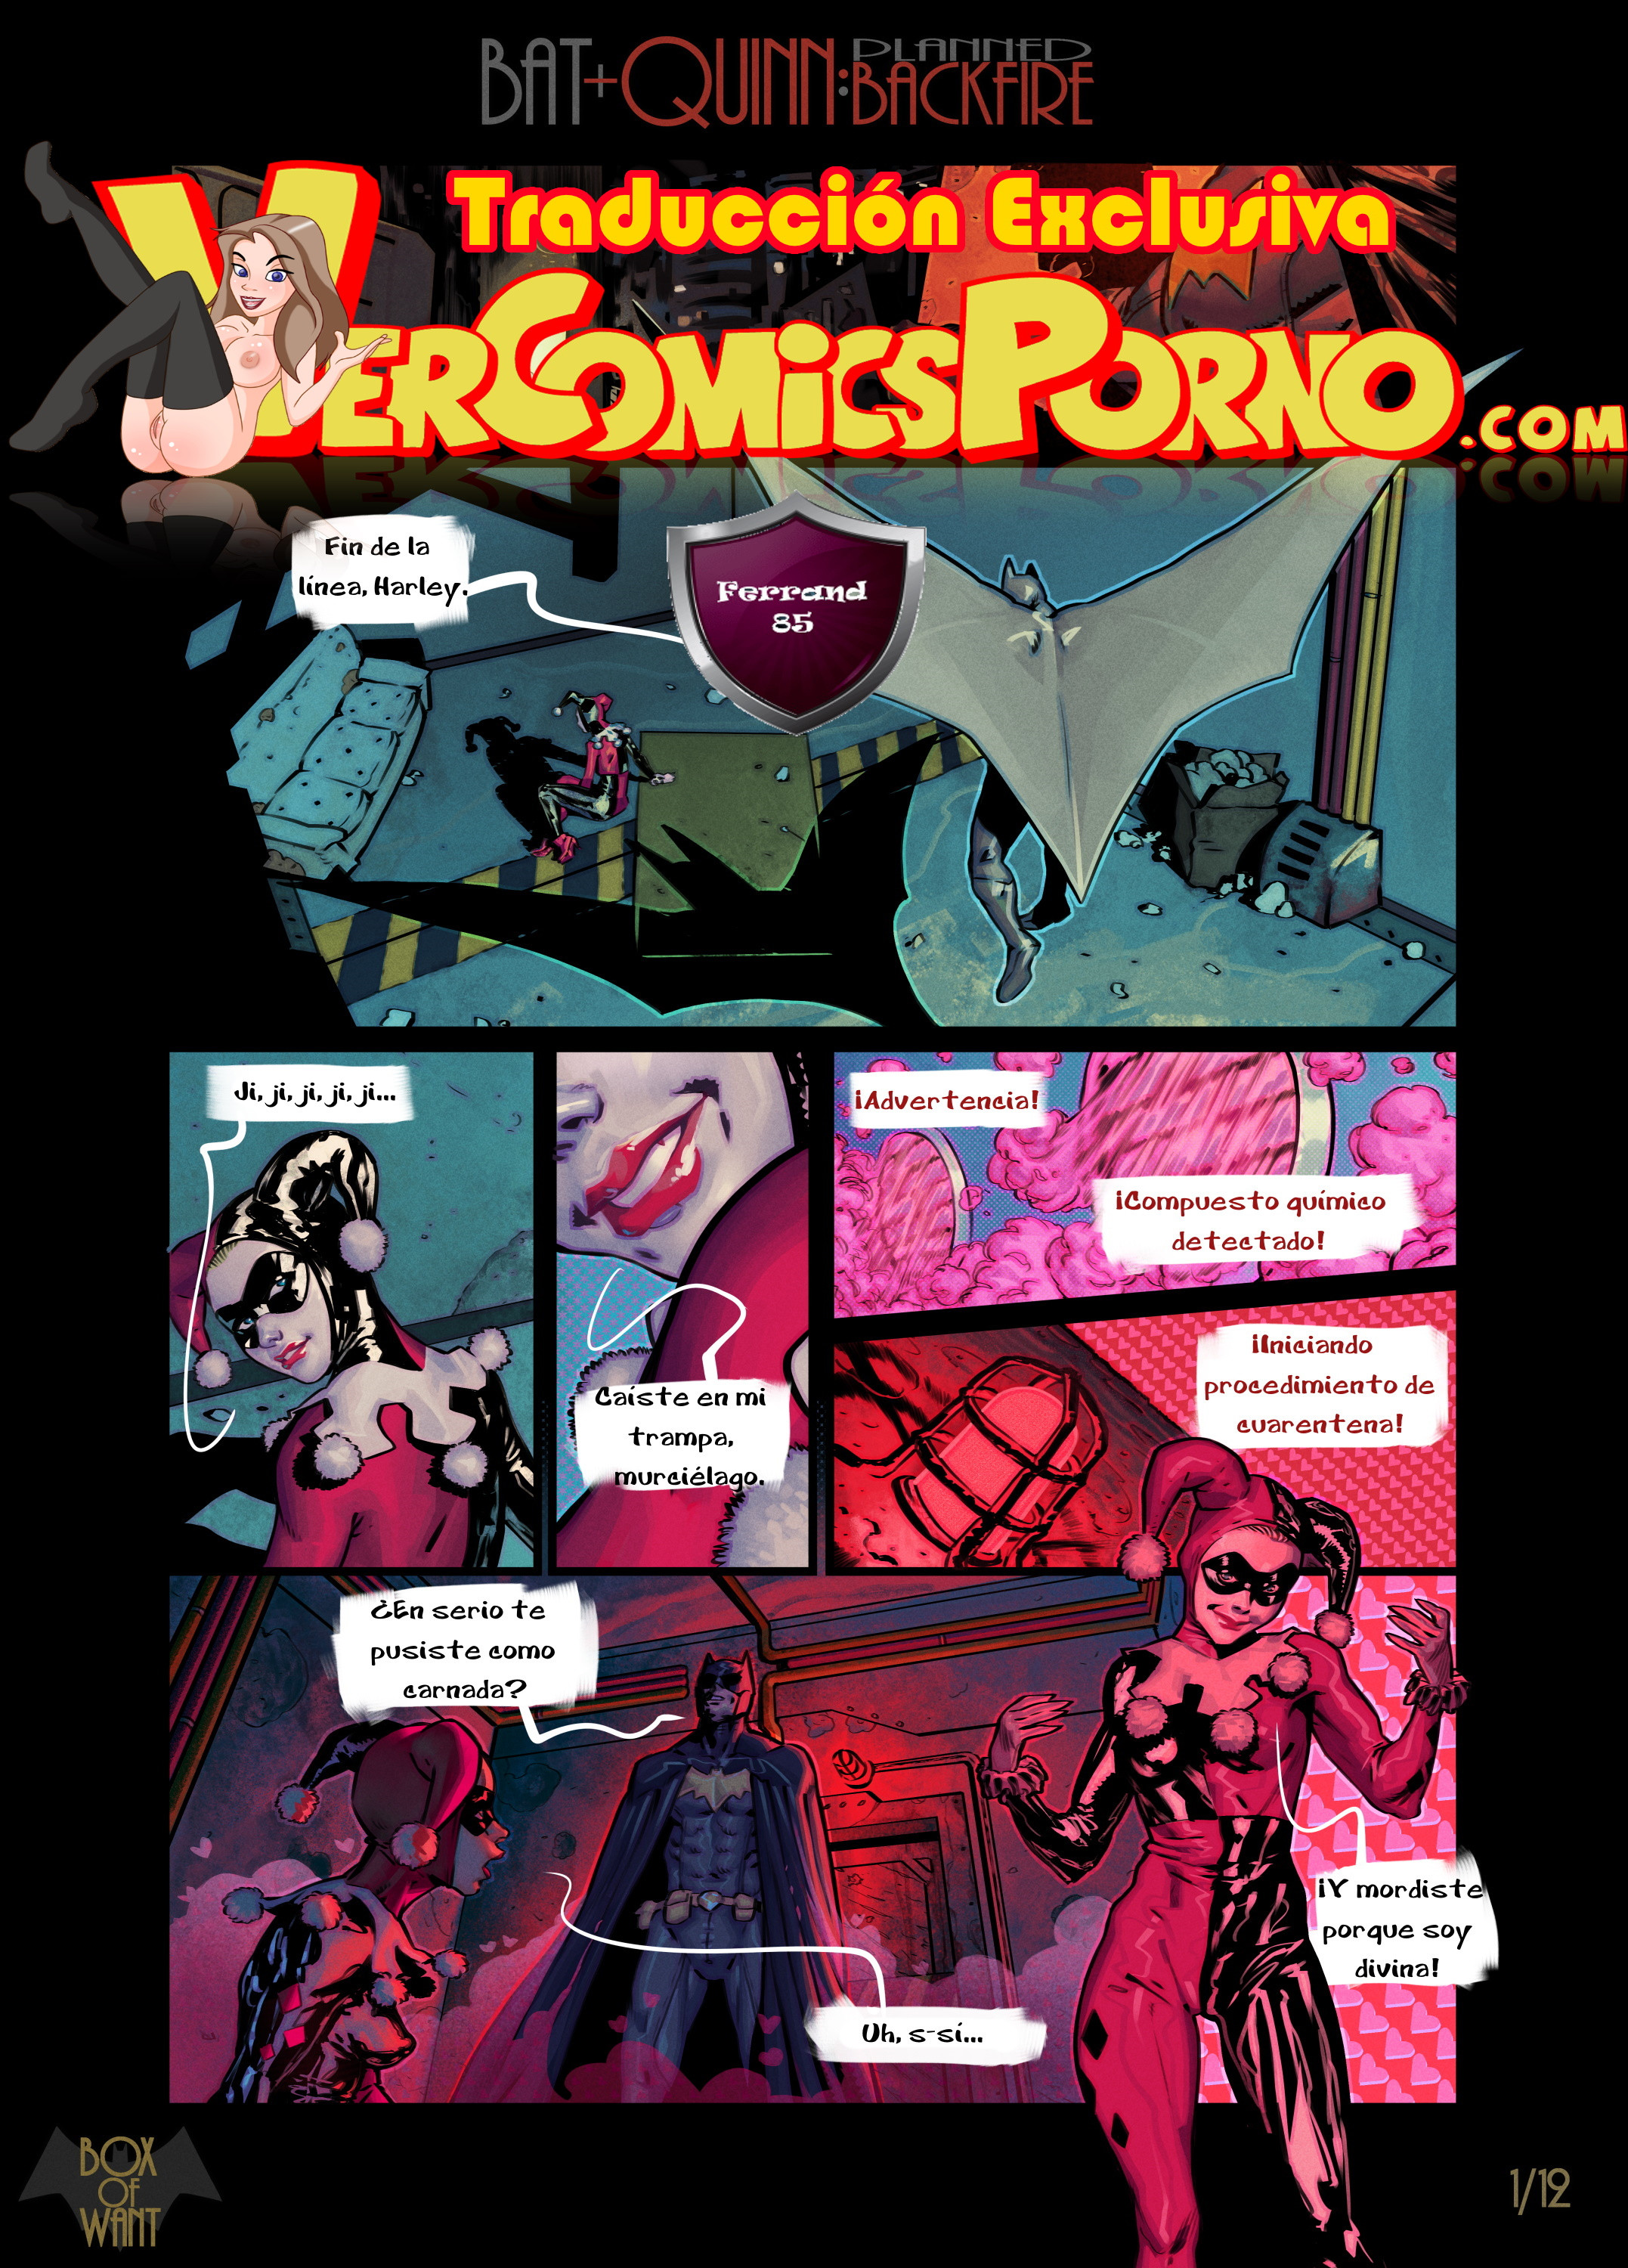 Best Harley Quinn Porn Comic - Batman y Harley Quinn: Fantasias de una noche - Vercomicsporno